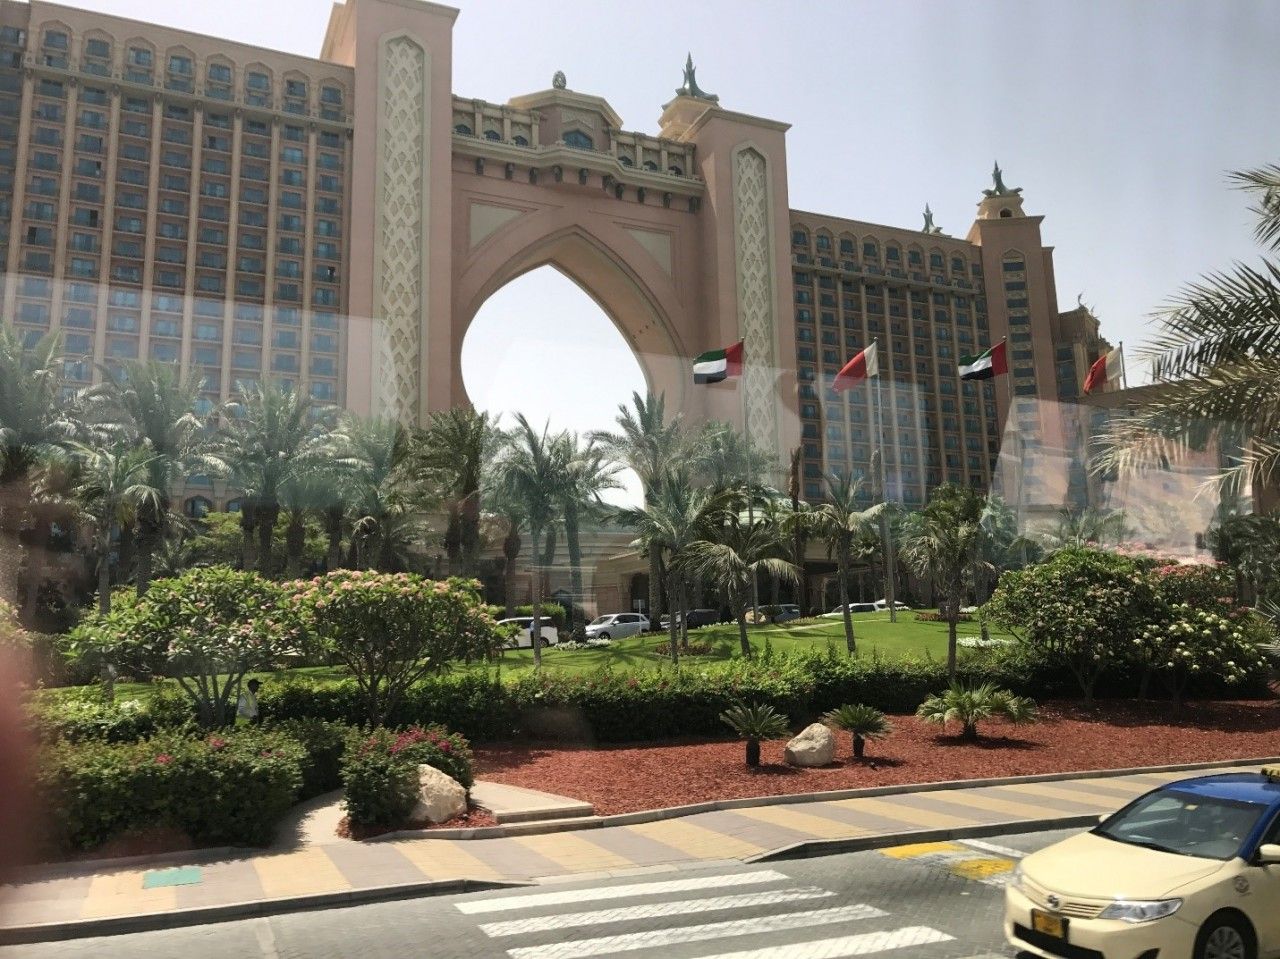 Atlantis Hotel in Dubai’s Palm Jumeirah